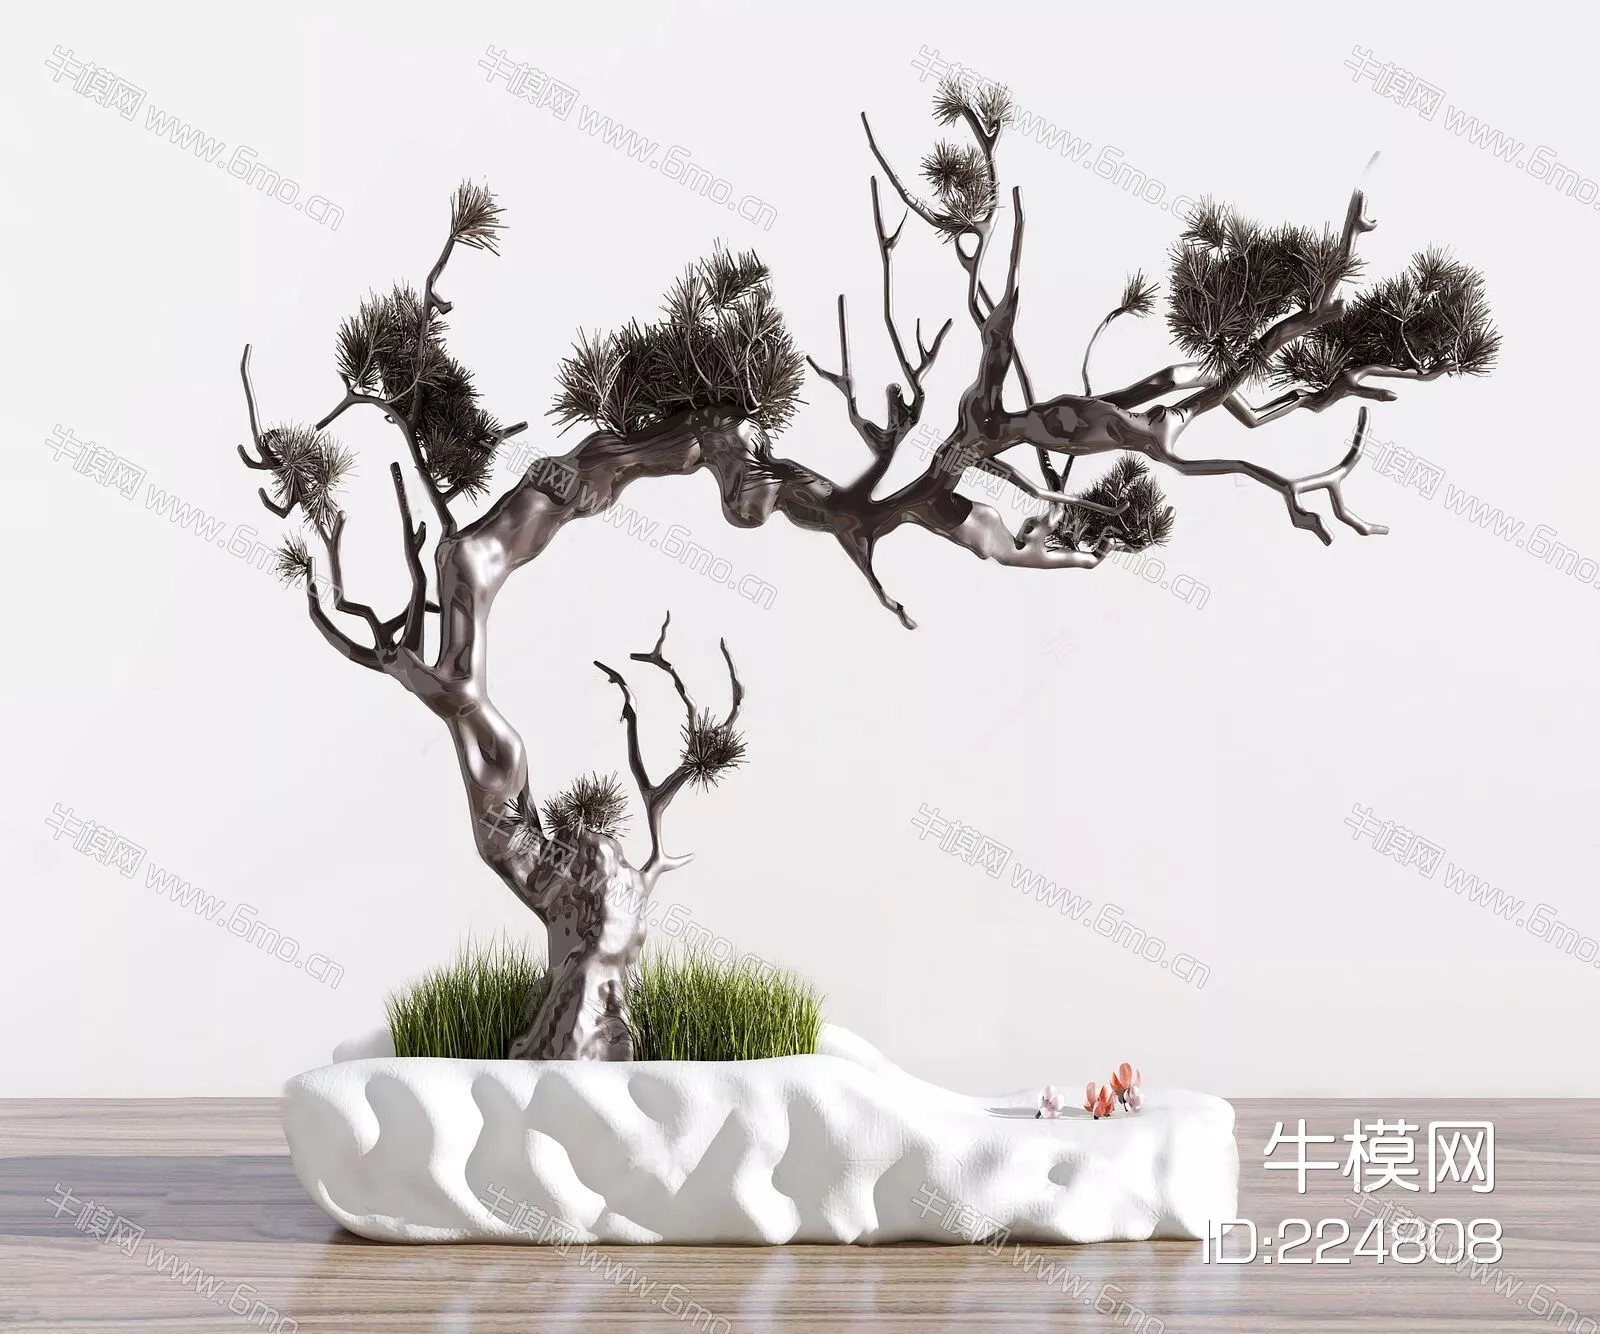 CHINESE FURNITURE - SKETCHUP 3D MODEL - ENSCAPE - 224808